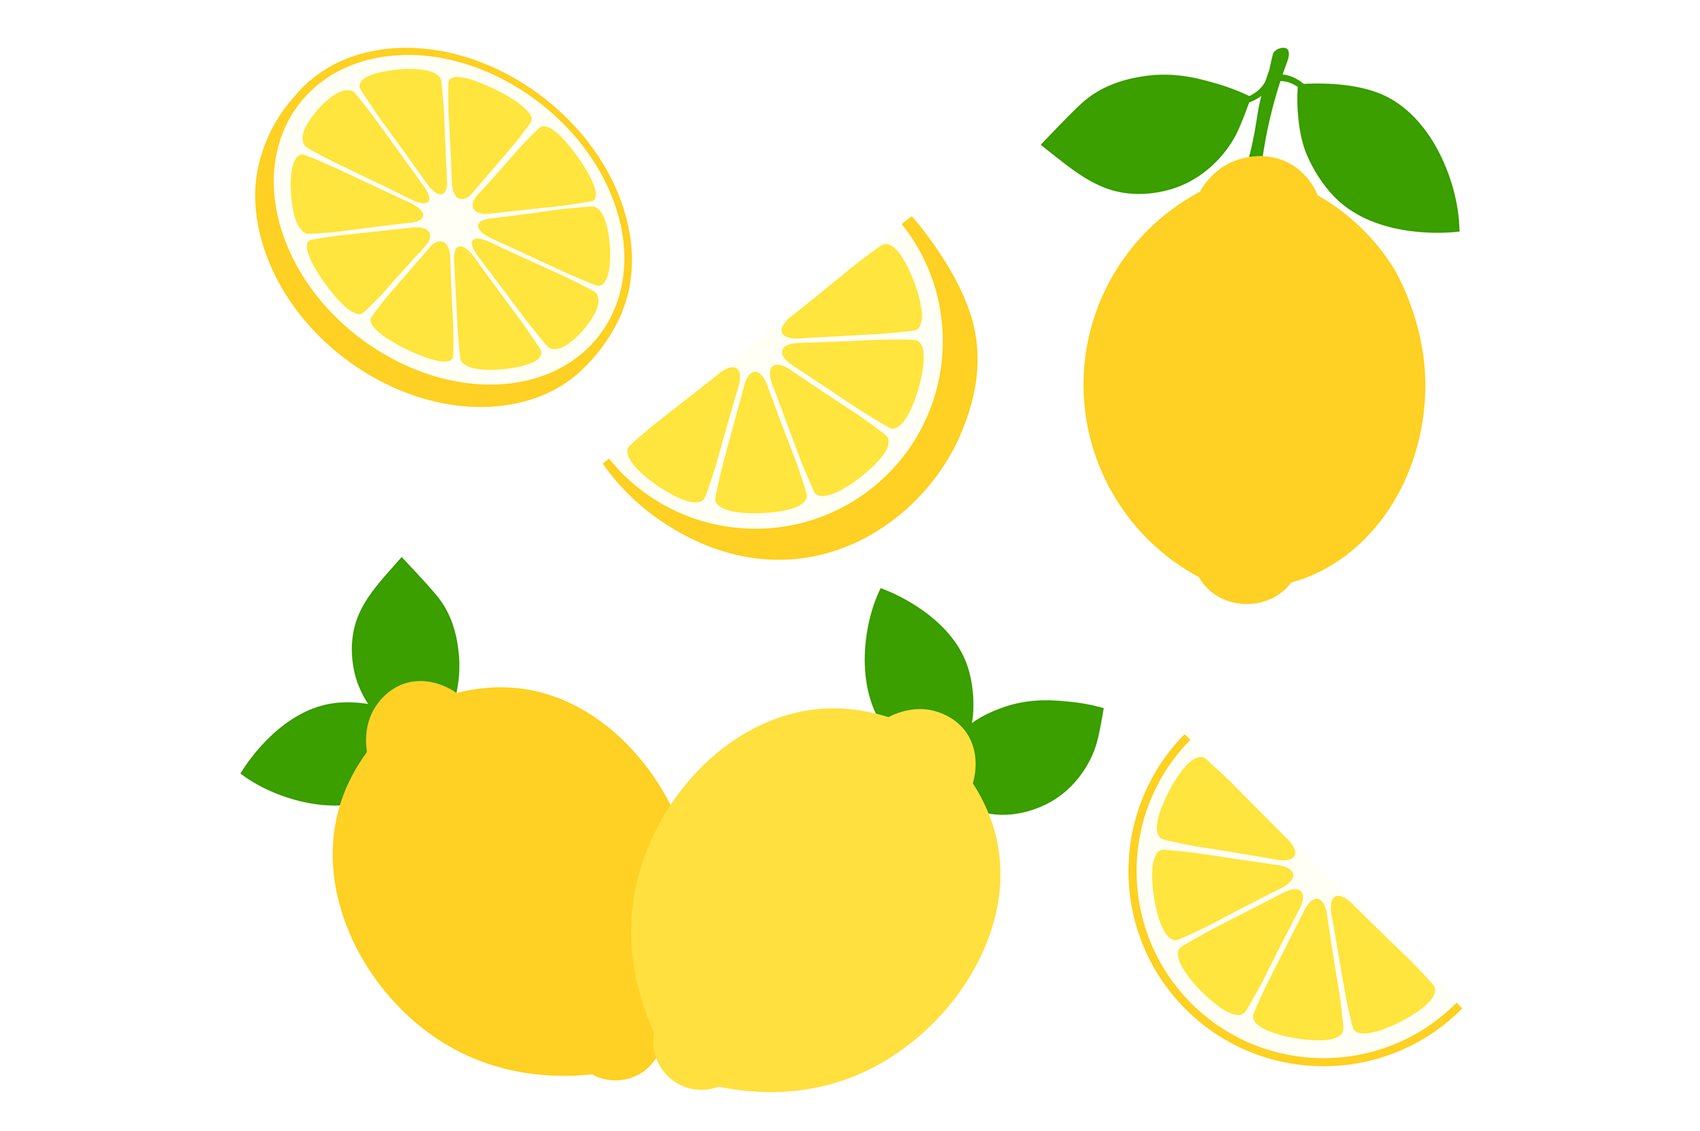 So bright lemons.